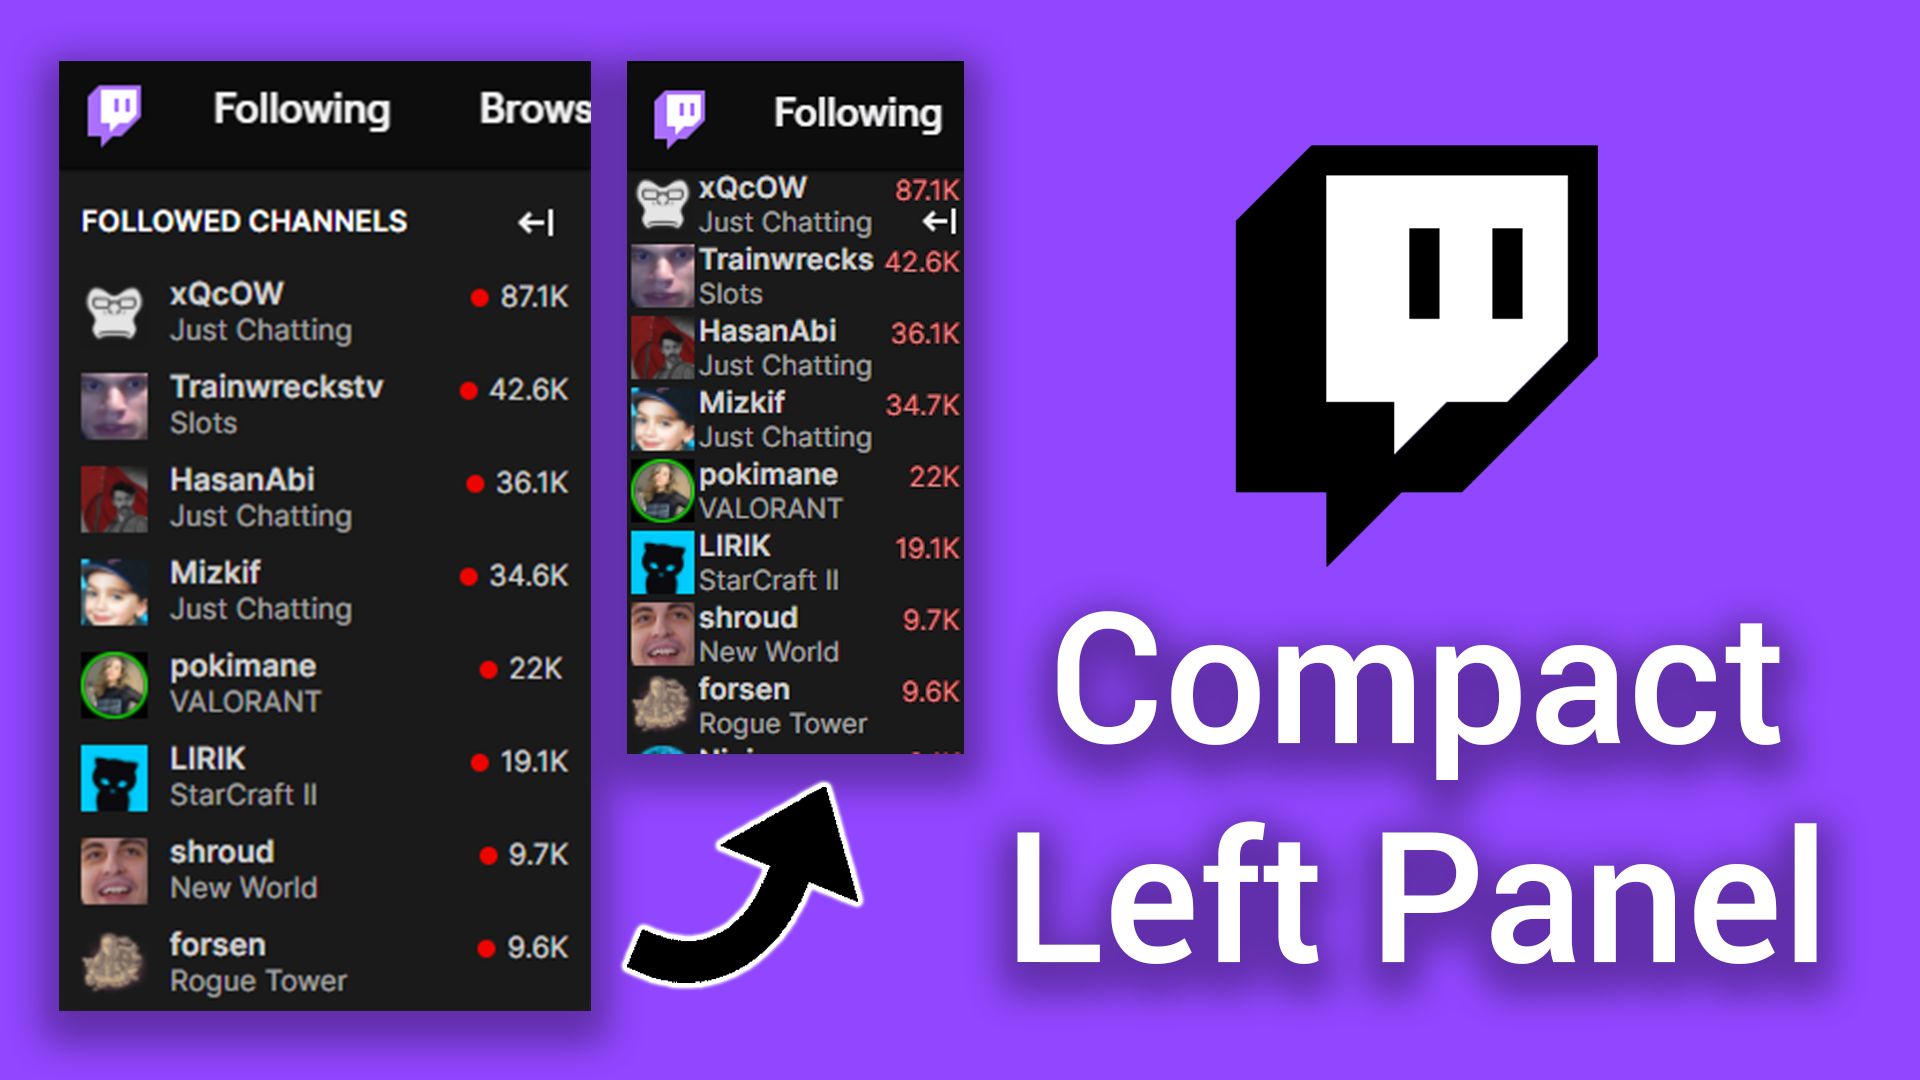 Twitch.tv Compact Left Panel screenshot